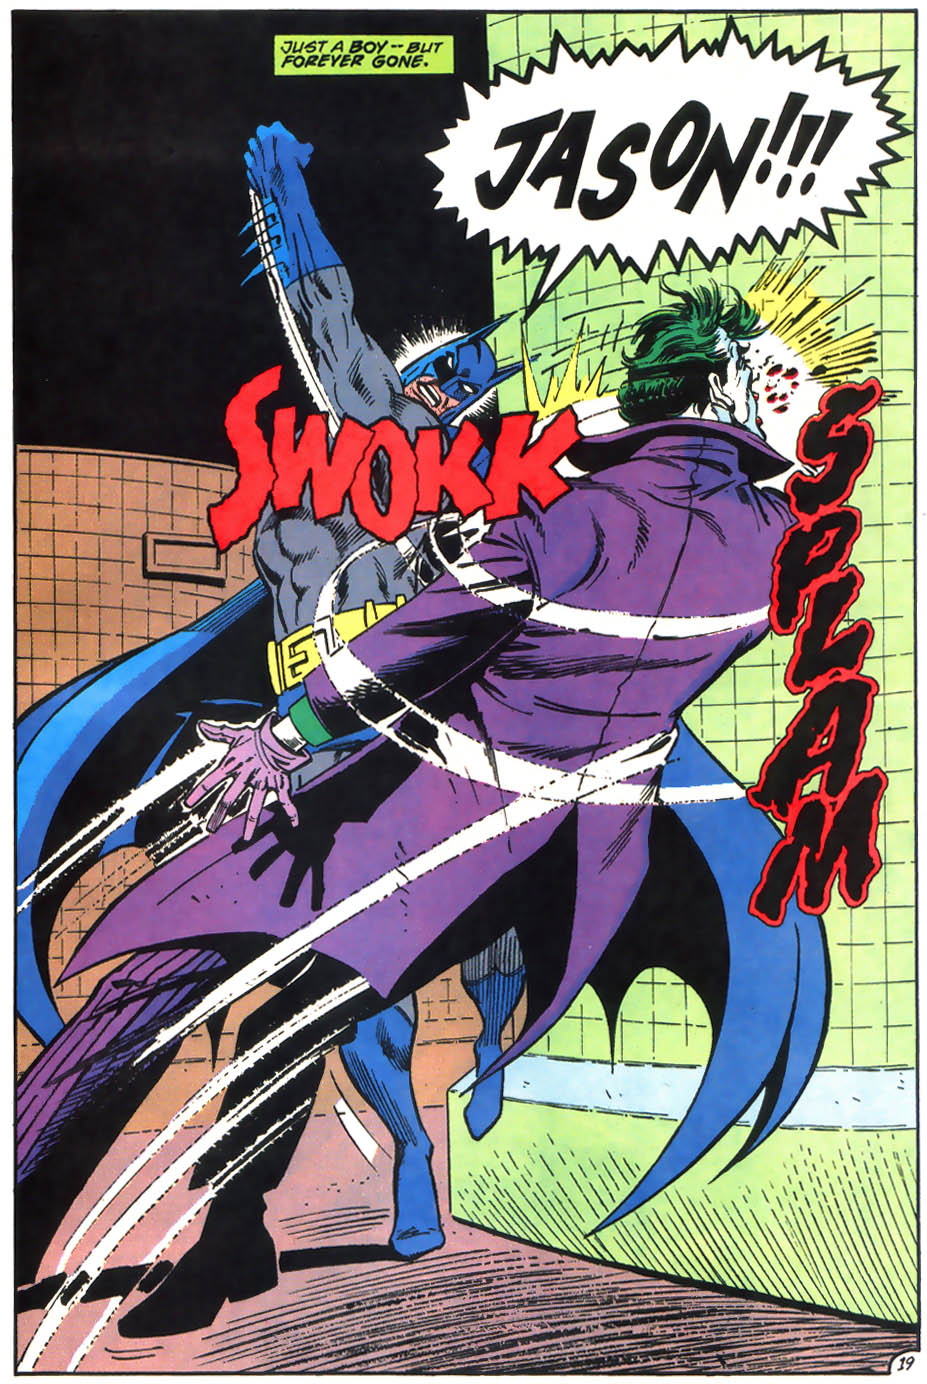 Comic-Images » Batman punches joker while yelling JASON